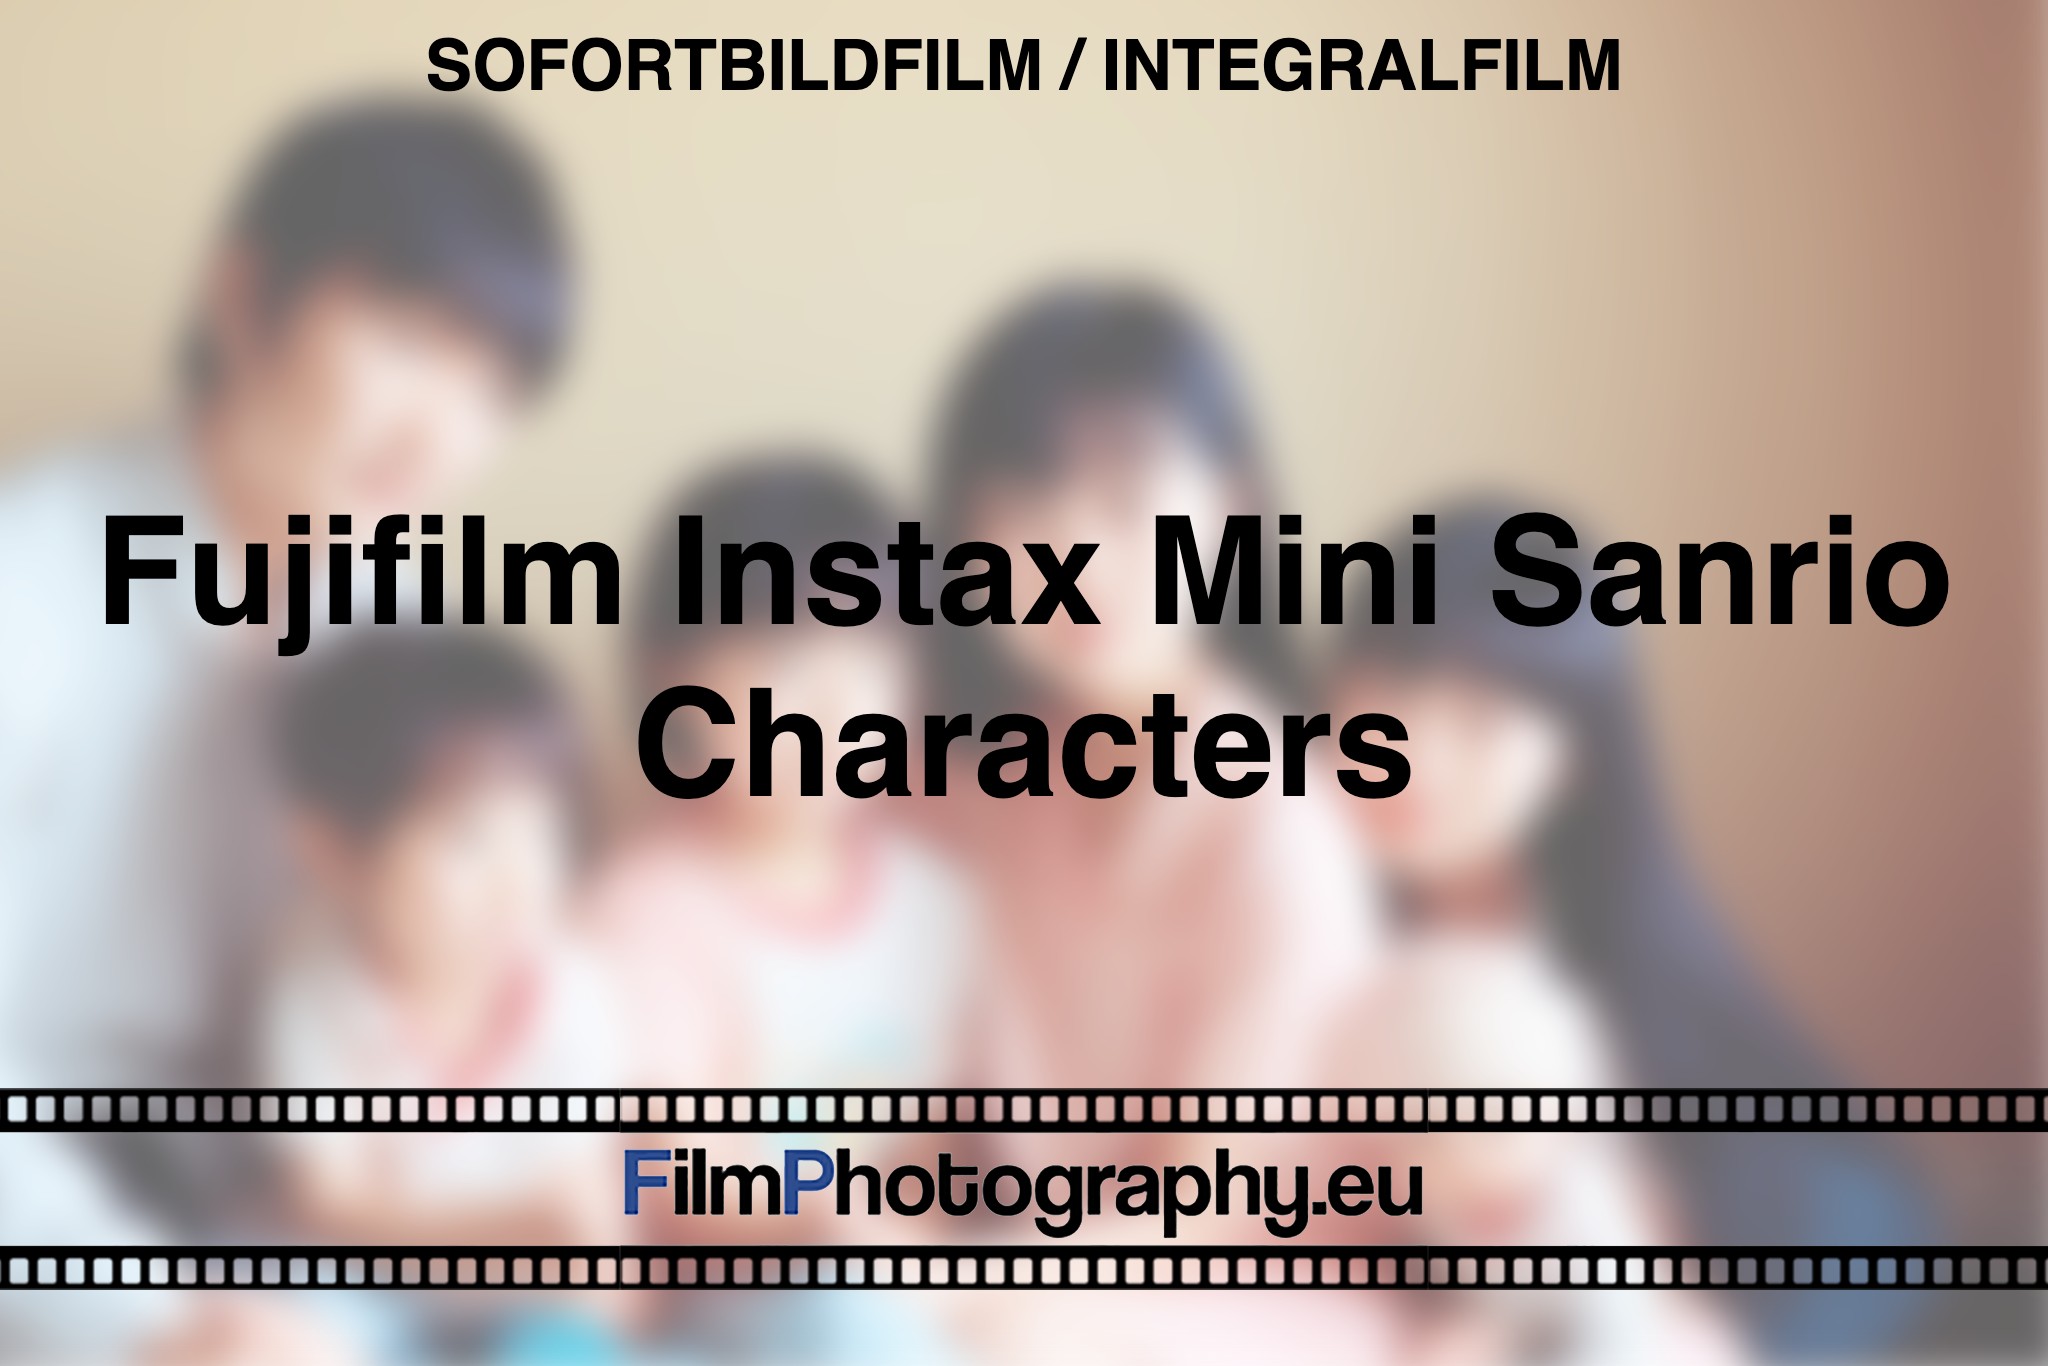 fujifilm-instax-mini-sanrio-characters-sofortbildfilm-integralfilm-fp-bnv